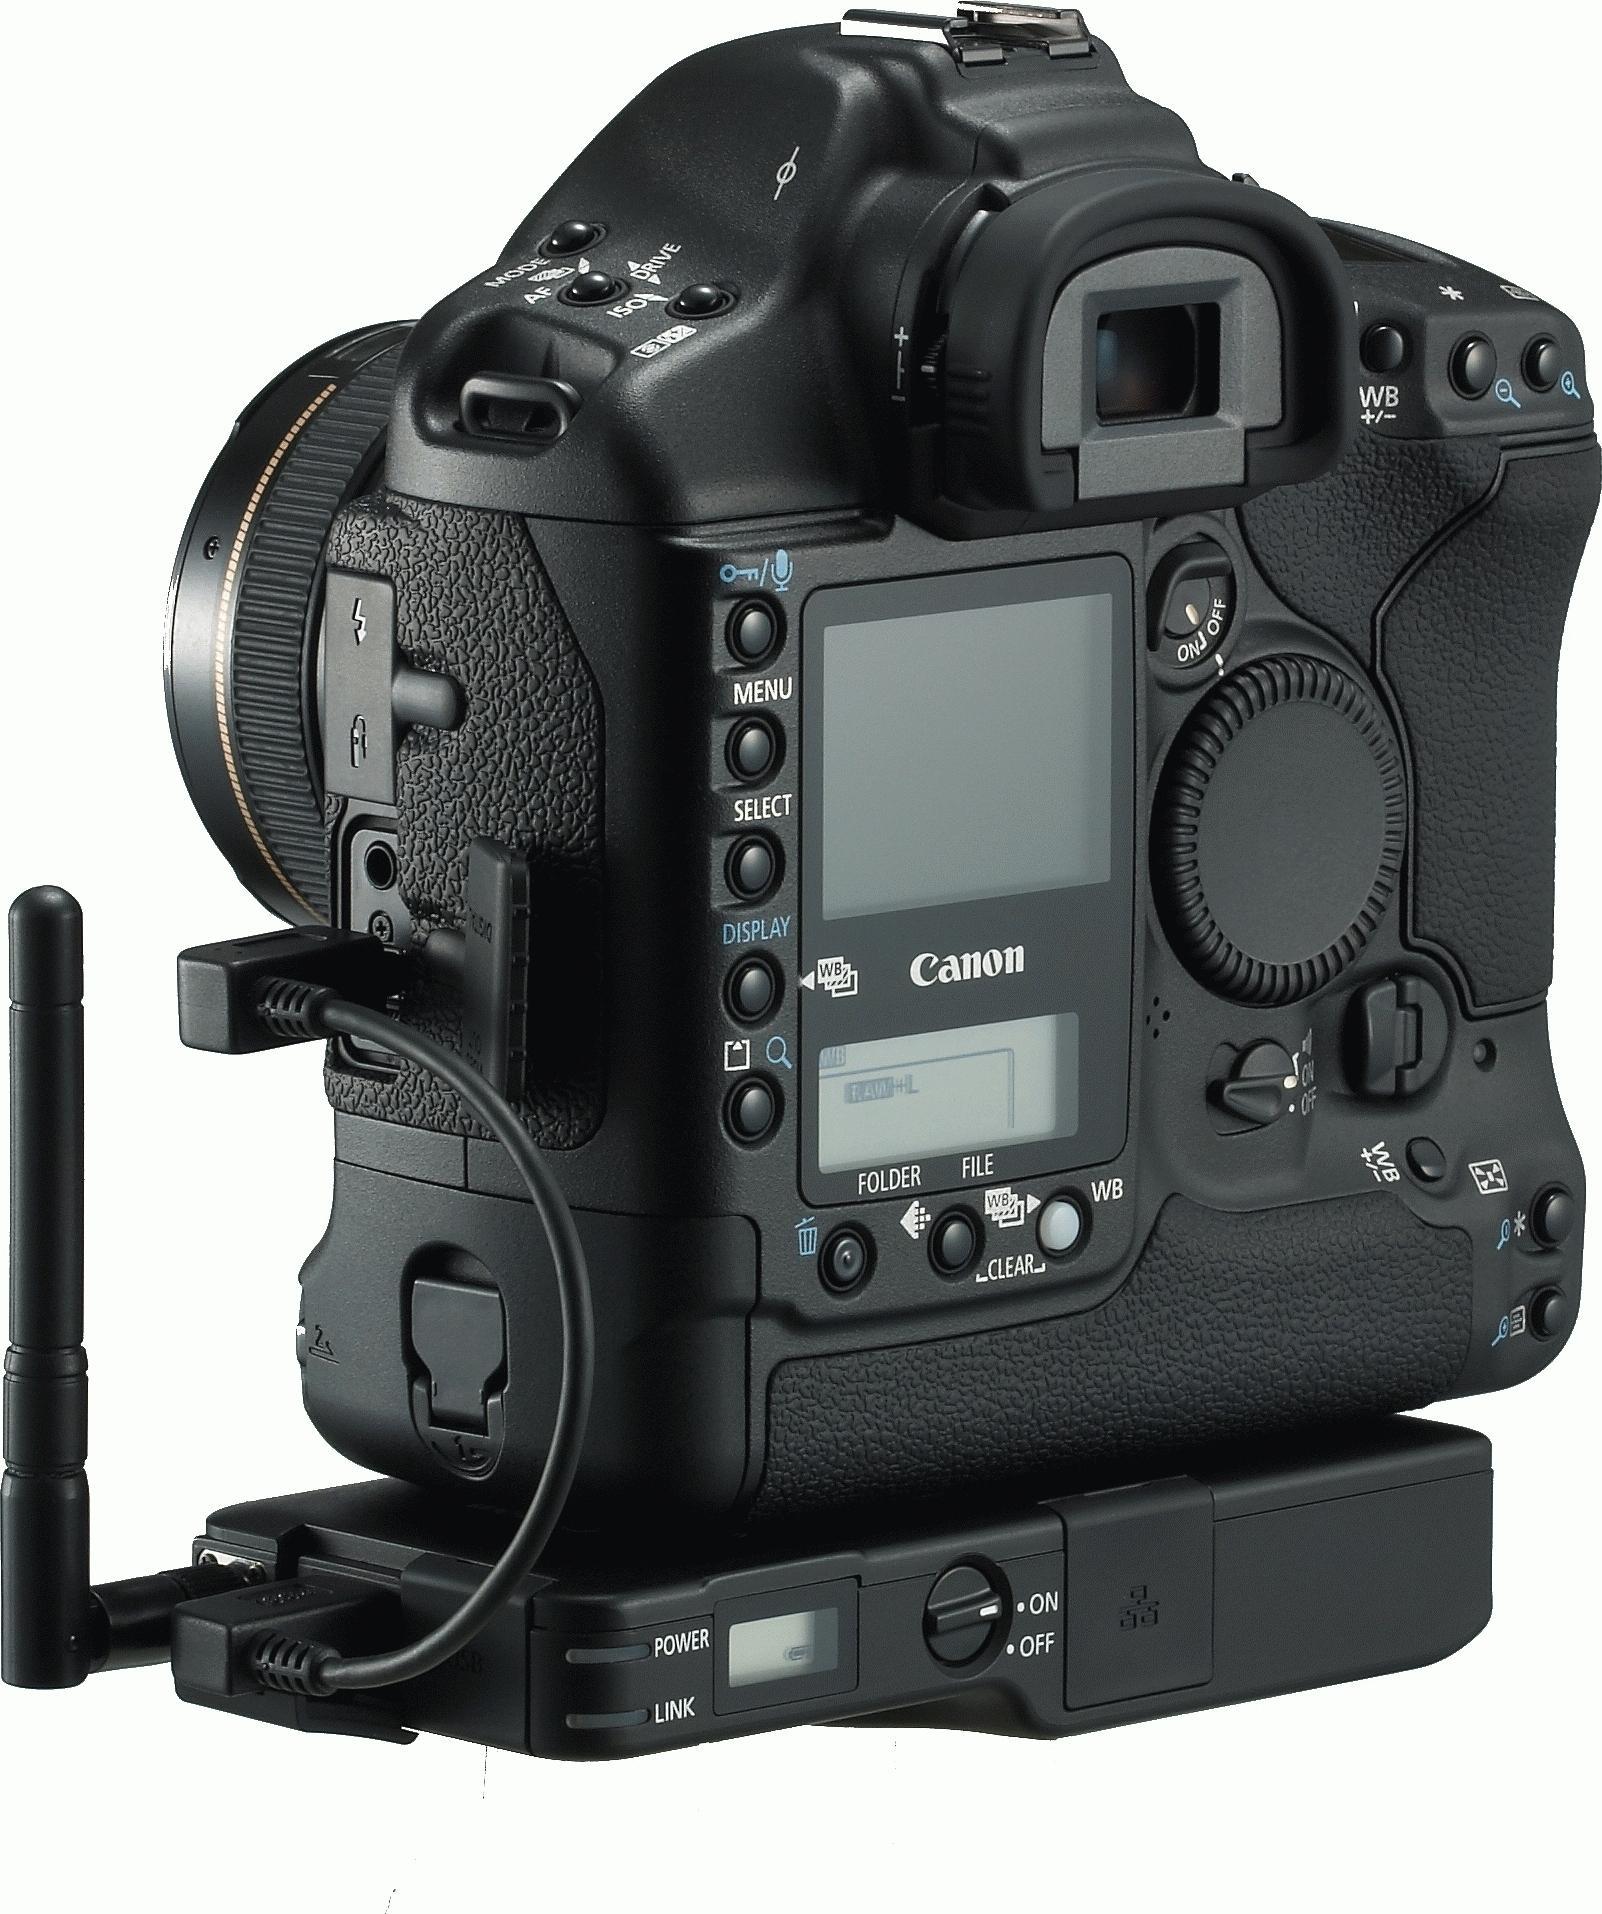 Canon Eos 1ds Mark Ii Digital Camera Full Specifications